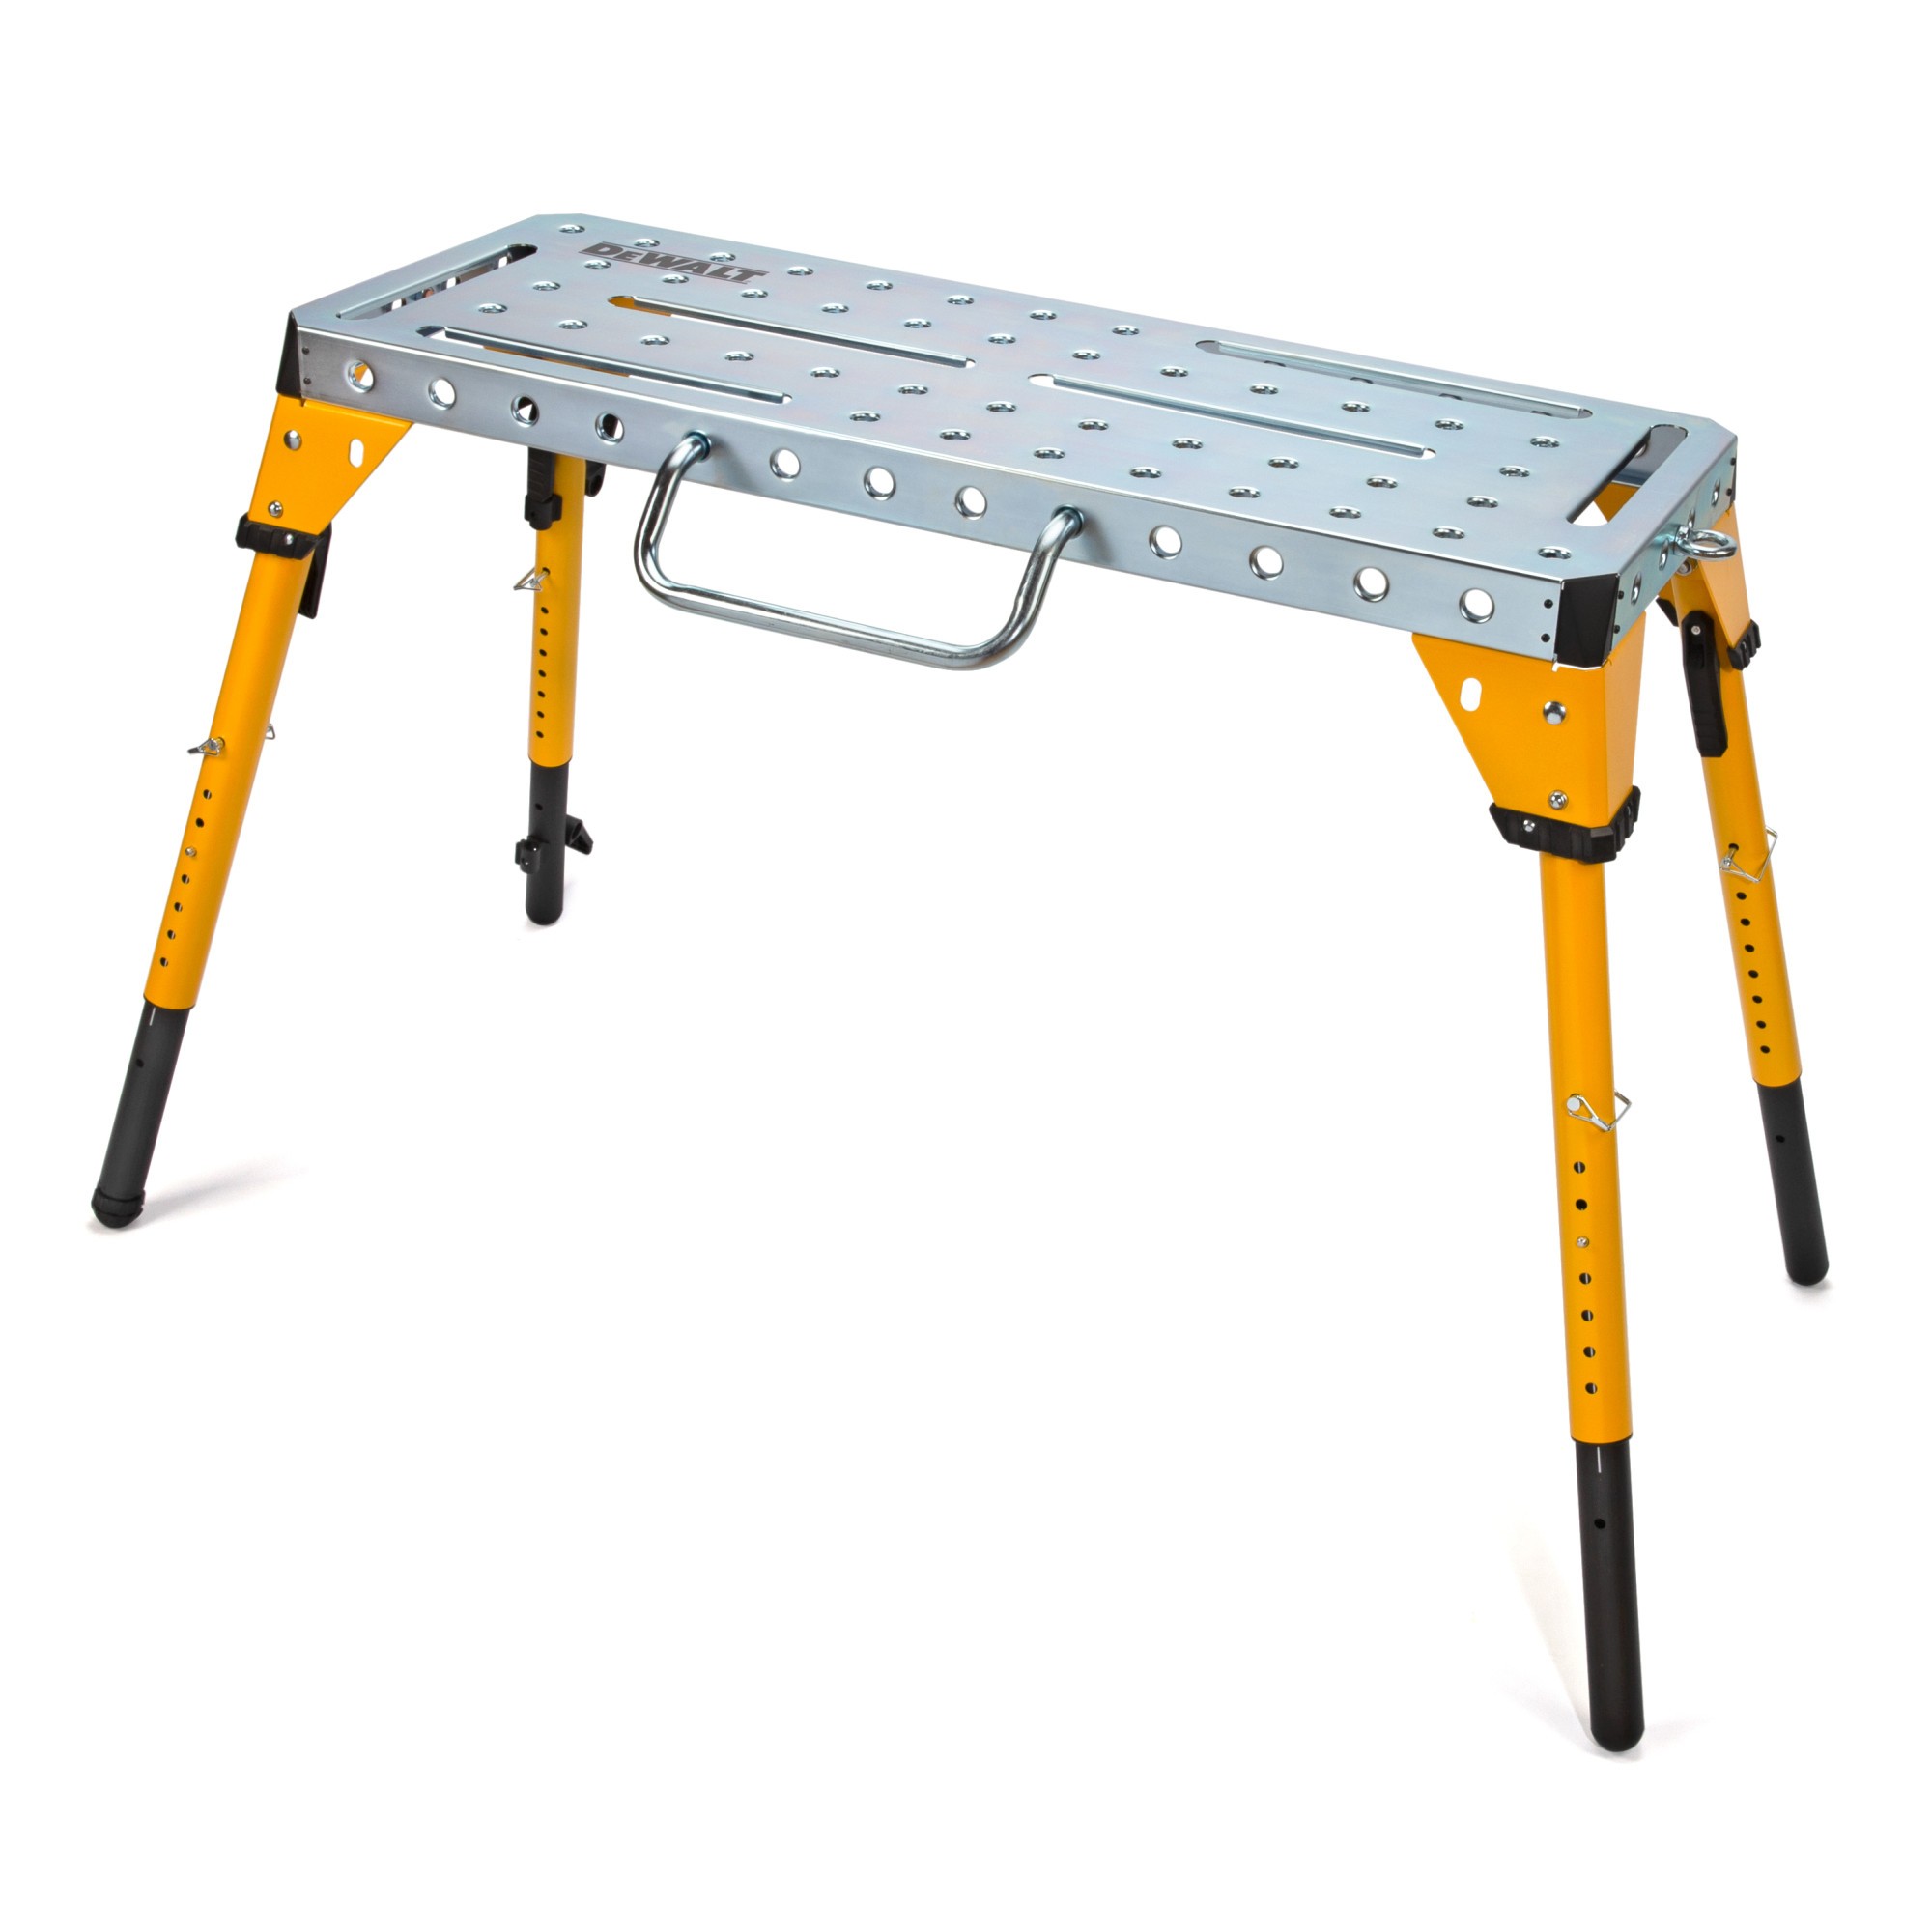 Dewalt adjustable height portable steel welding table and